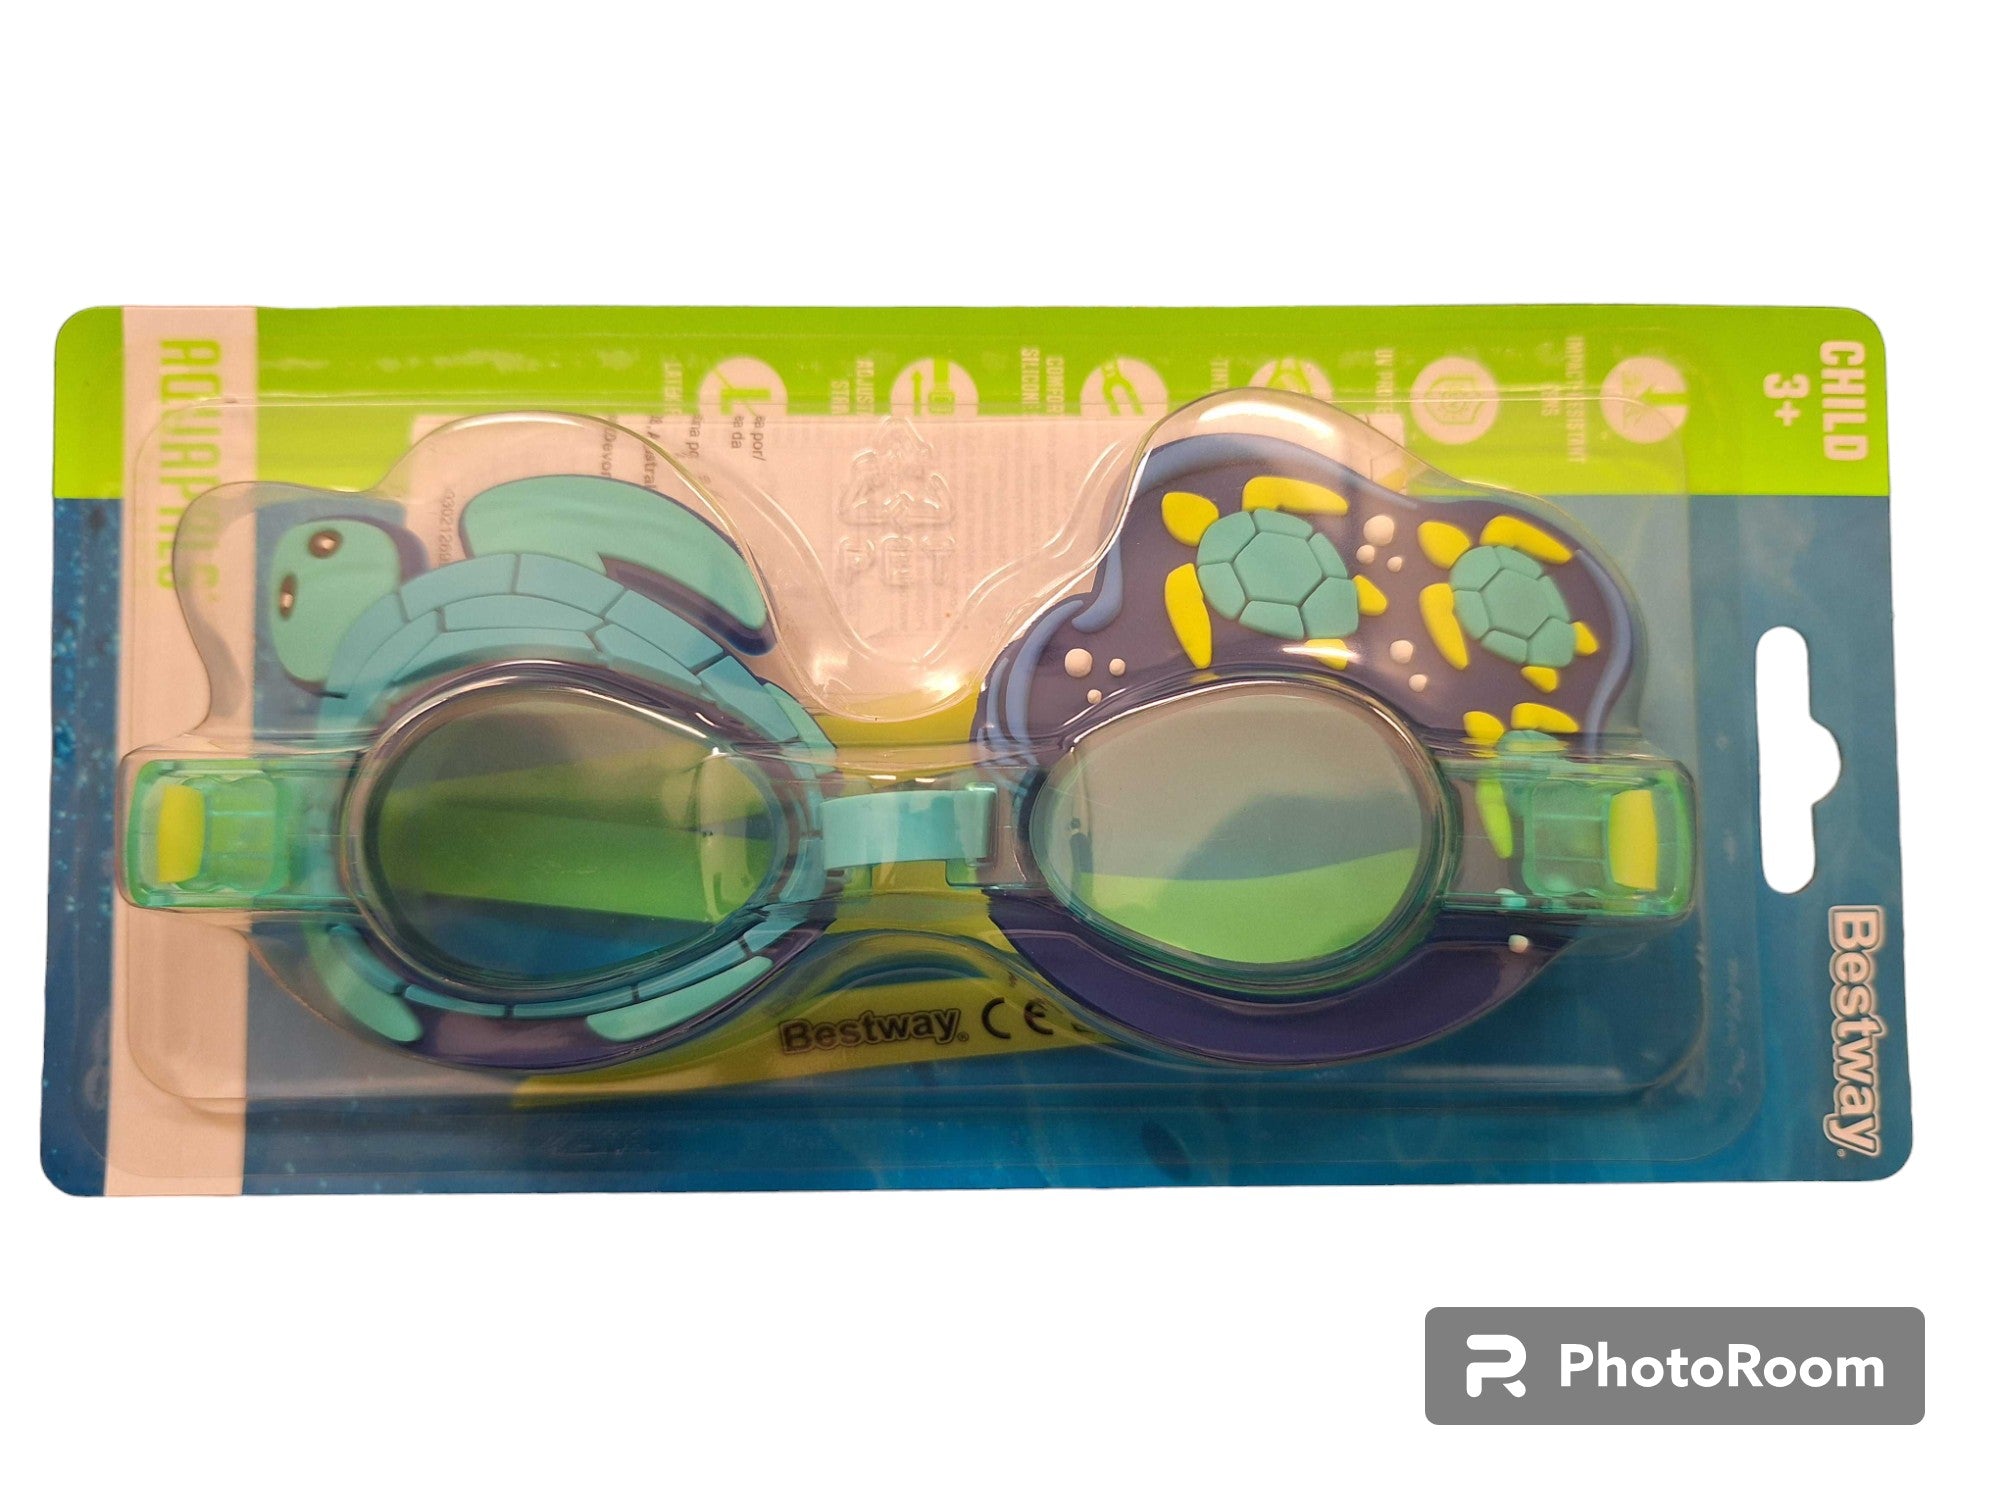 Hydro-Swim Goggles with UV coating on